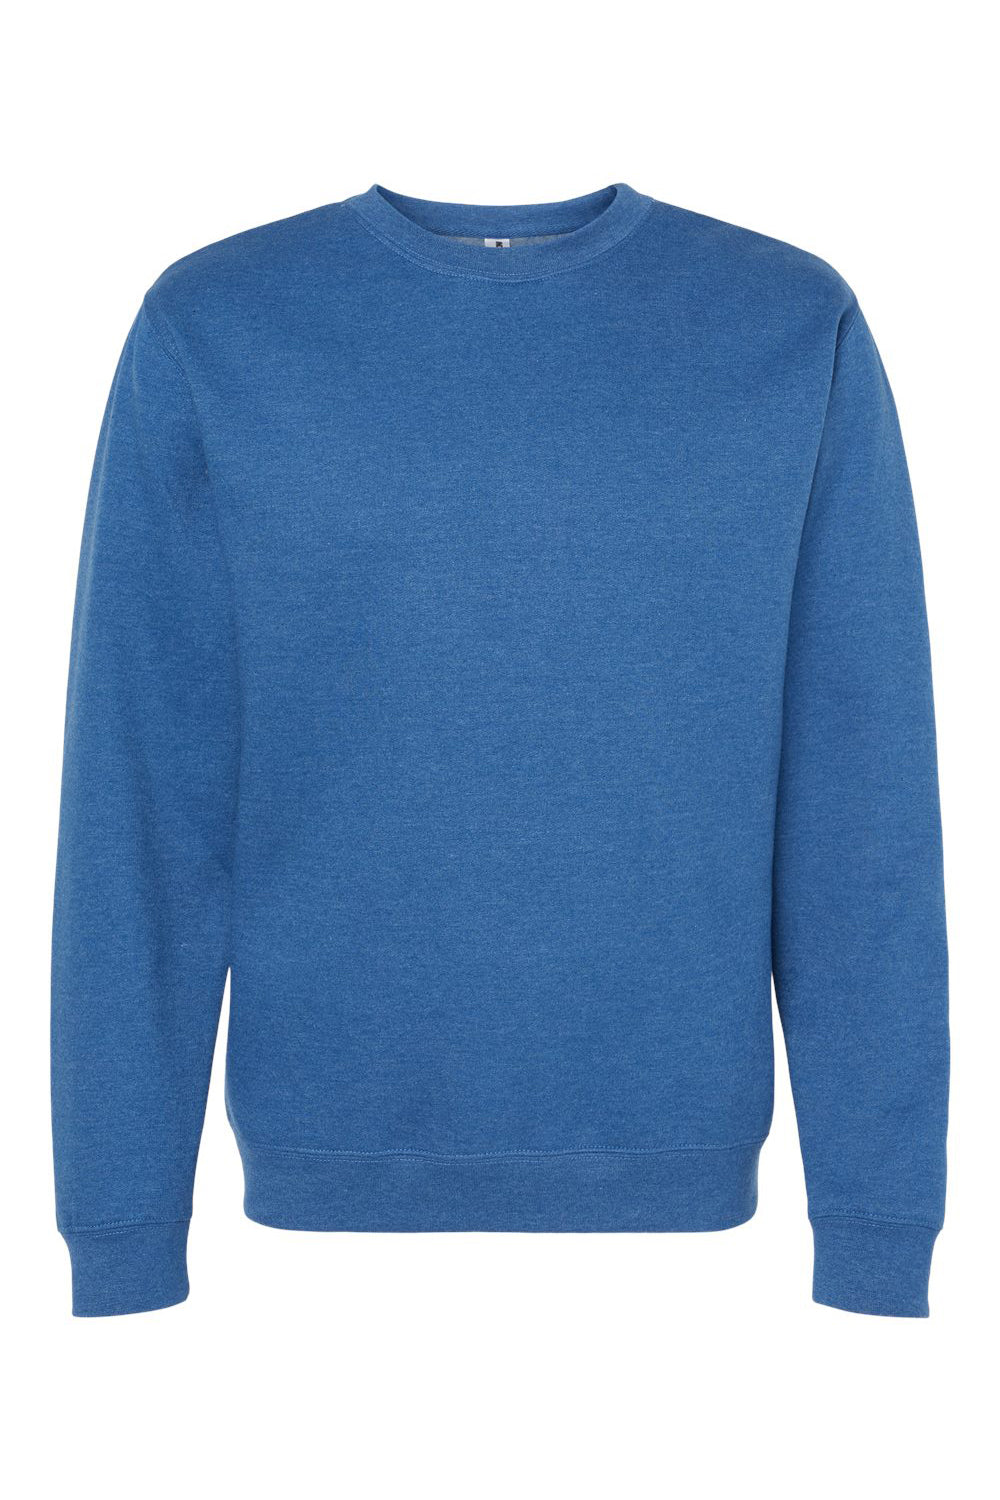 Independent Trading Co. SS3000 Mens Crewneck Sweatshirt Heather Royal Blue Flat Front